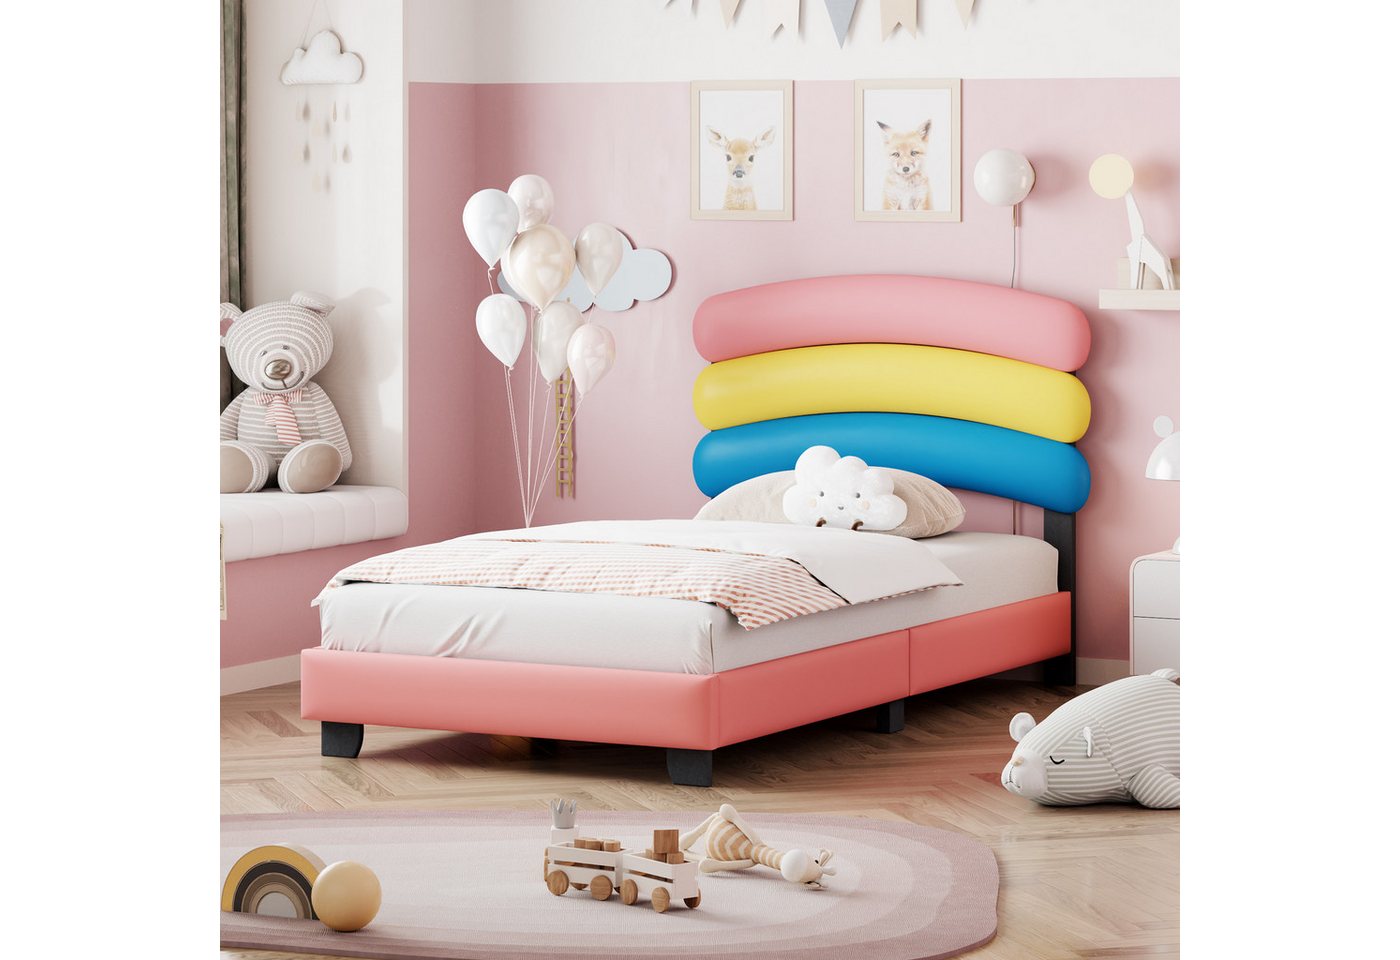 HOMAVO Kinderbett Kinderbett Polsterbett 90*200cm mit Lattenrost,Regenbogenform PU-Leder von HOMAVO